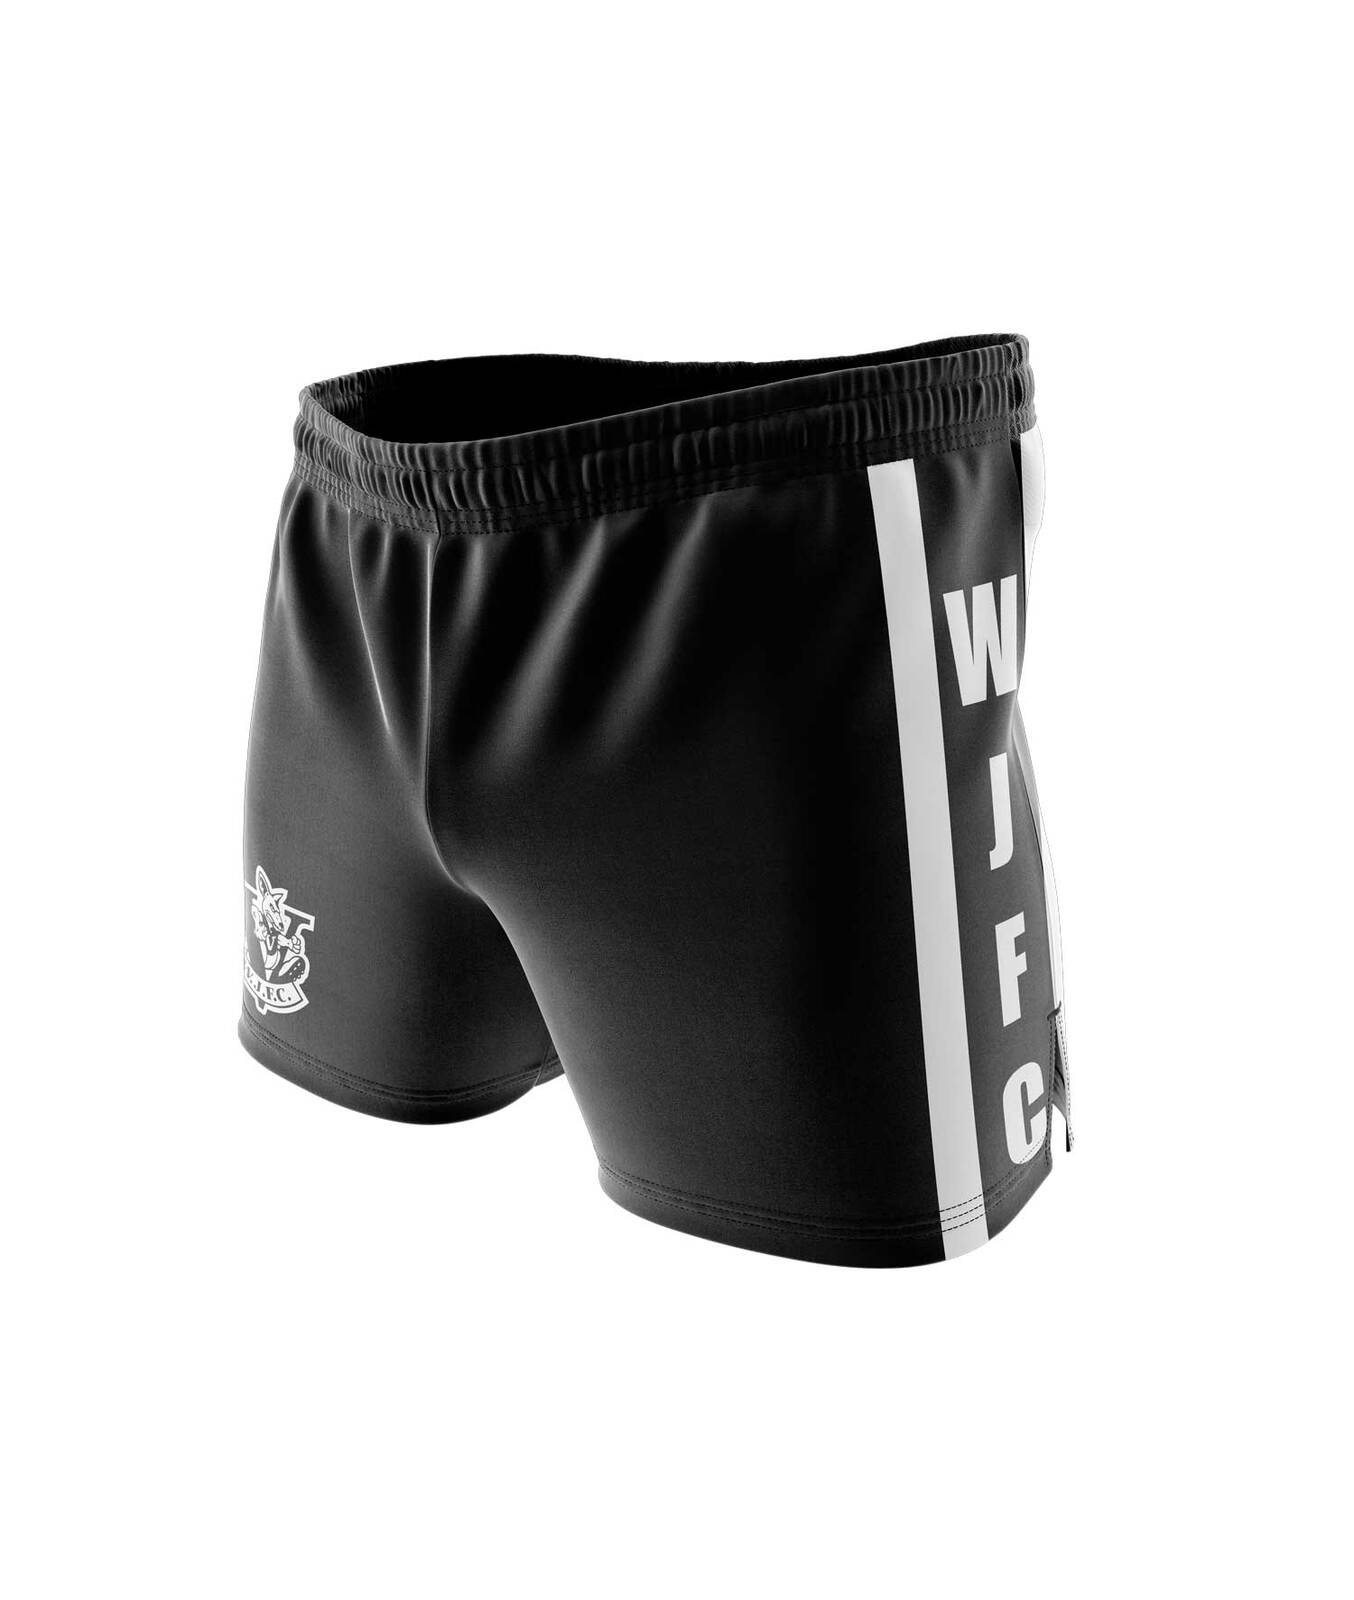 Buy WJFC Footy Shorts Online Mecca Sports